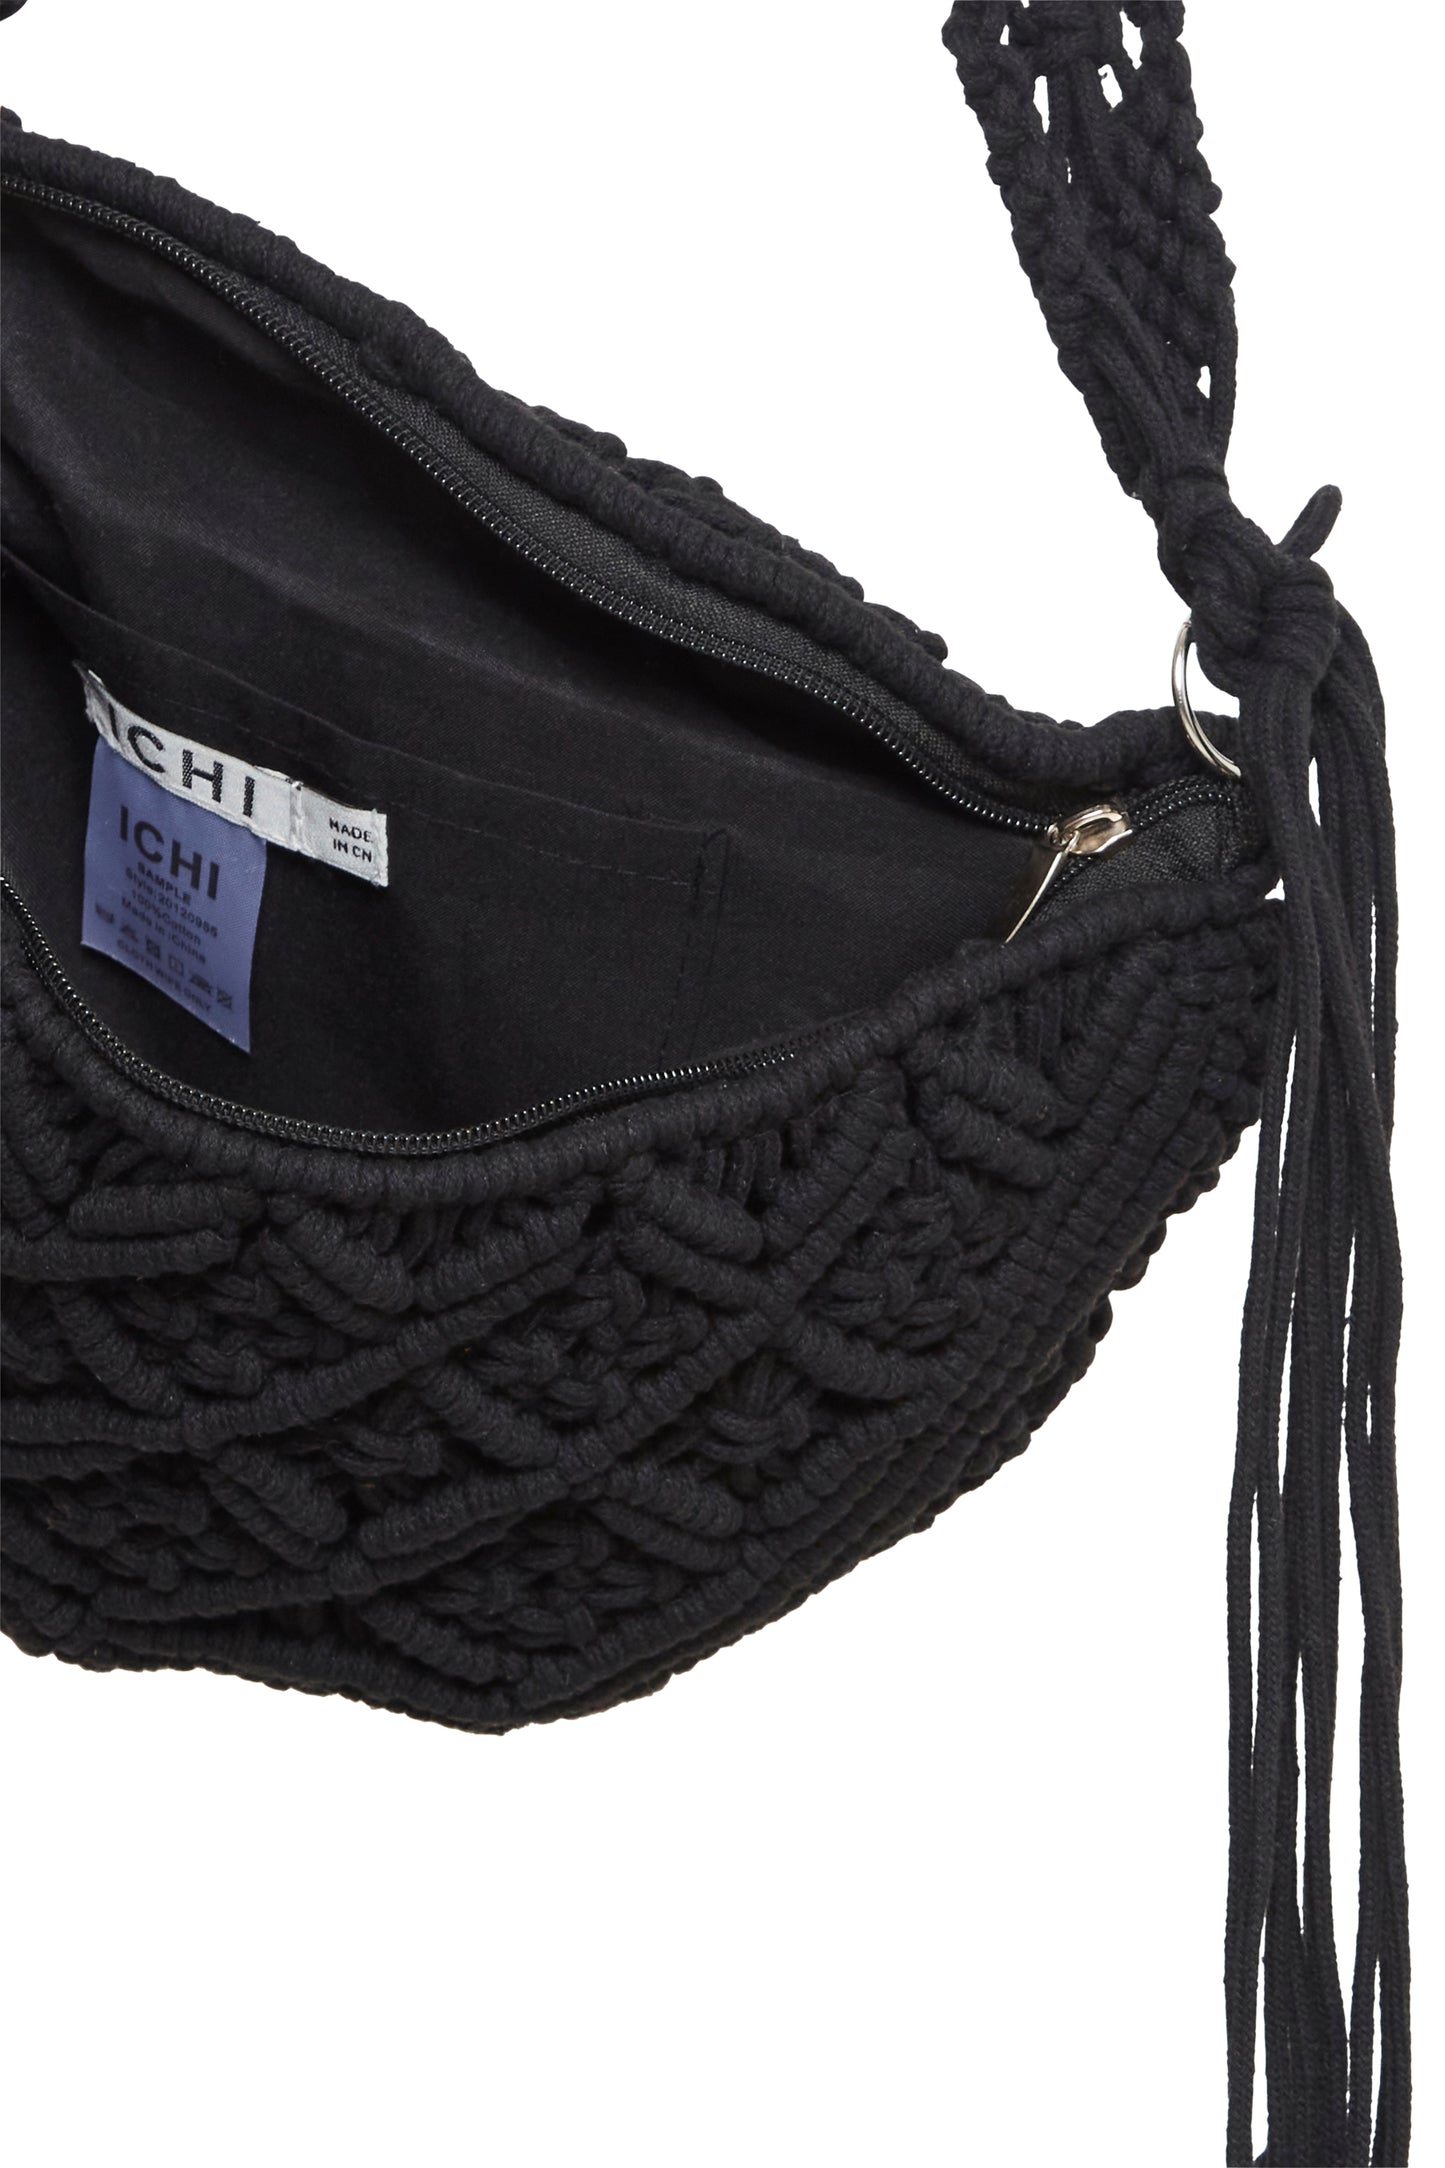 ICHI Veran Crochet Bag - Black